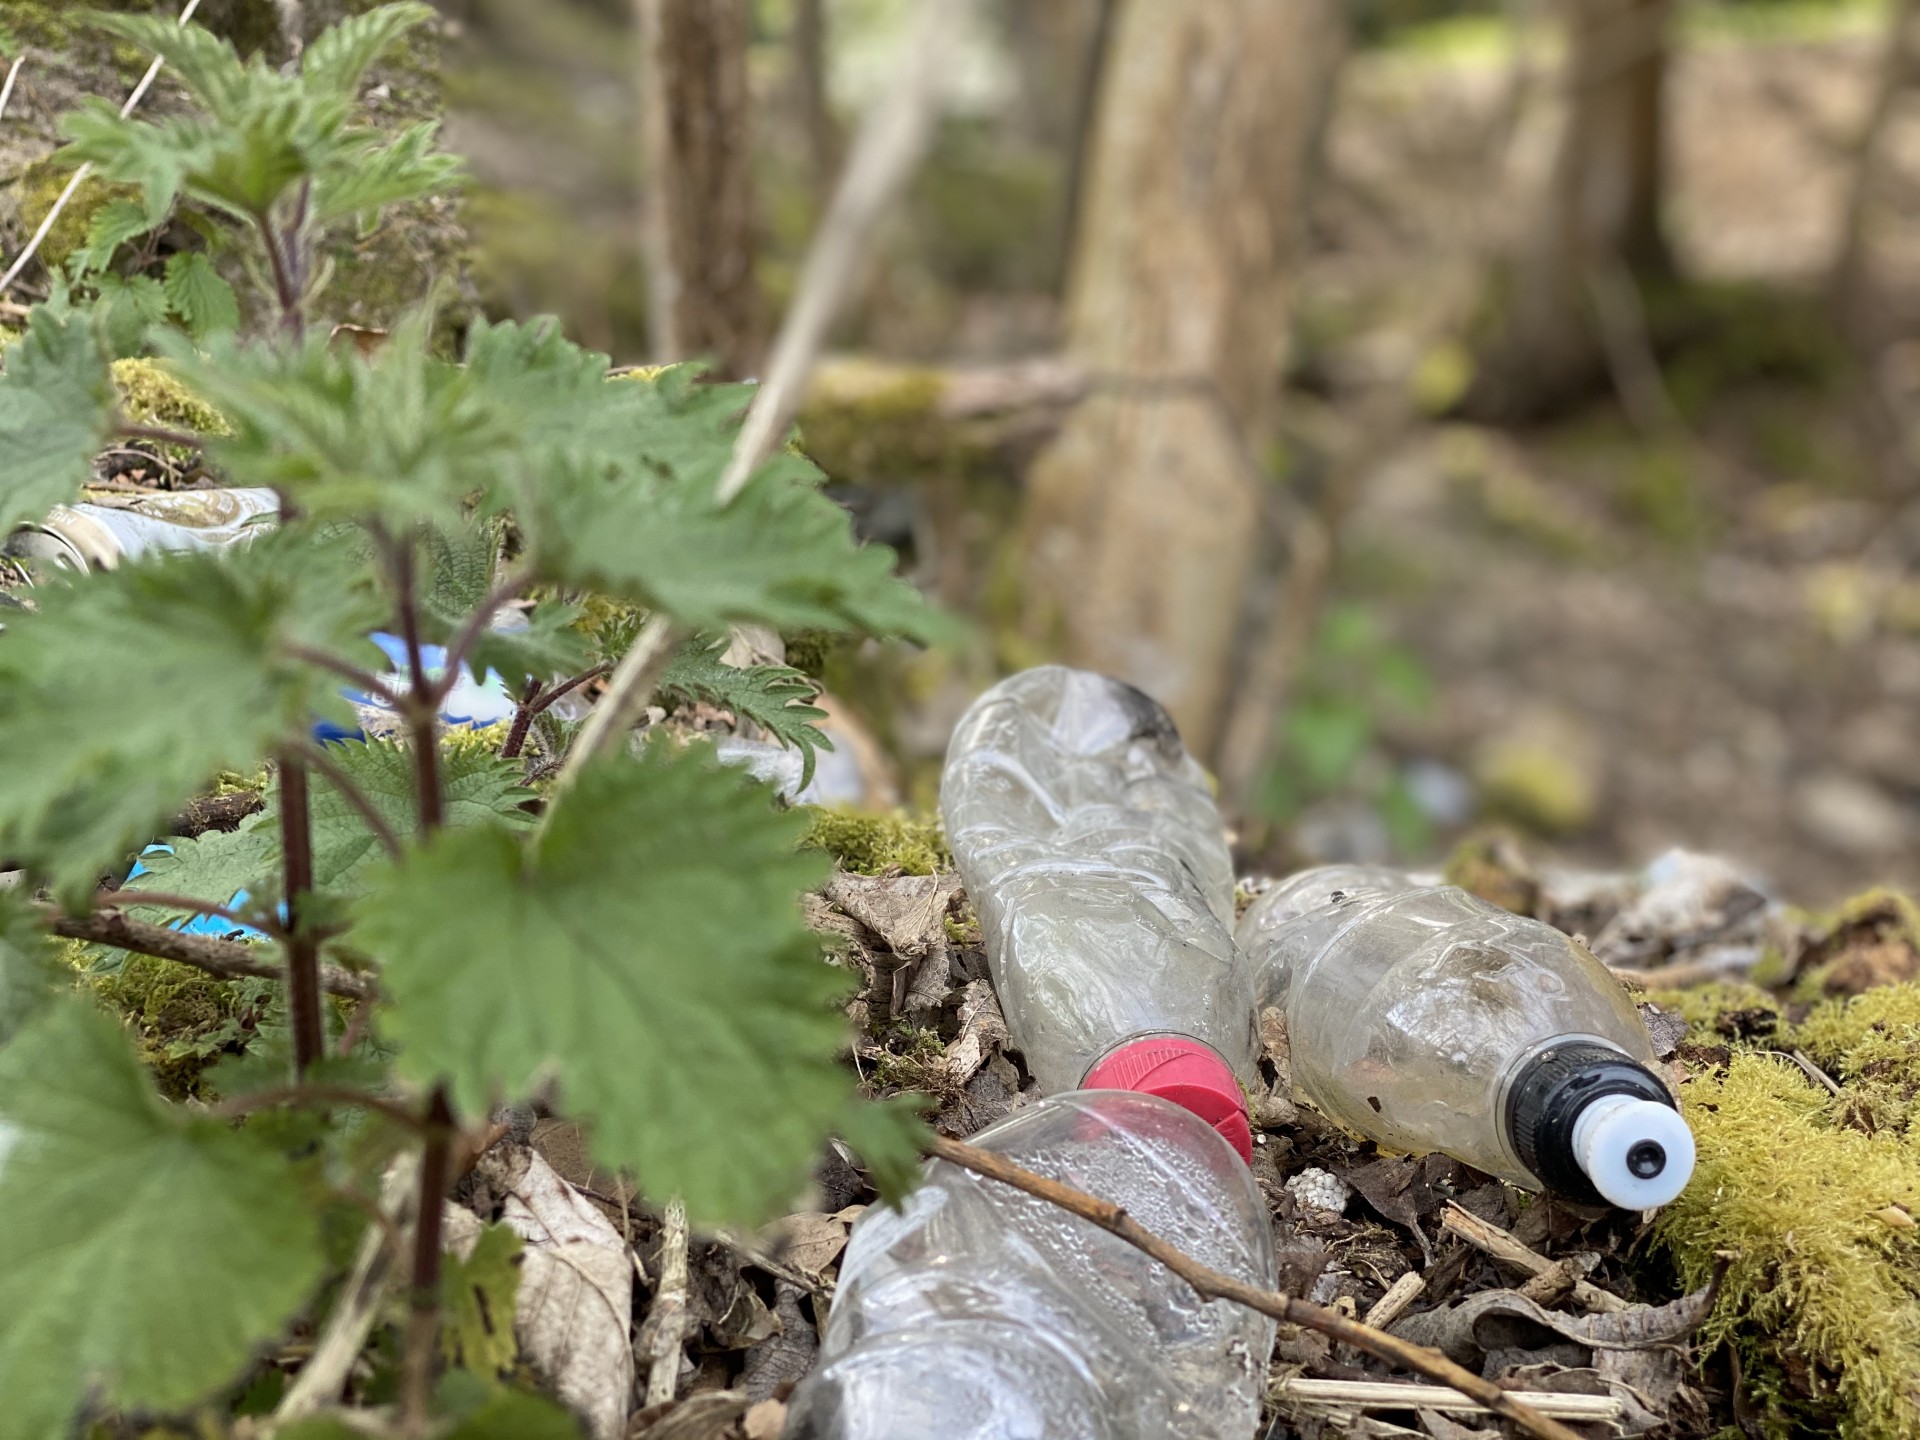 Plastic bottles lying amongst green undergrowth.